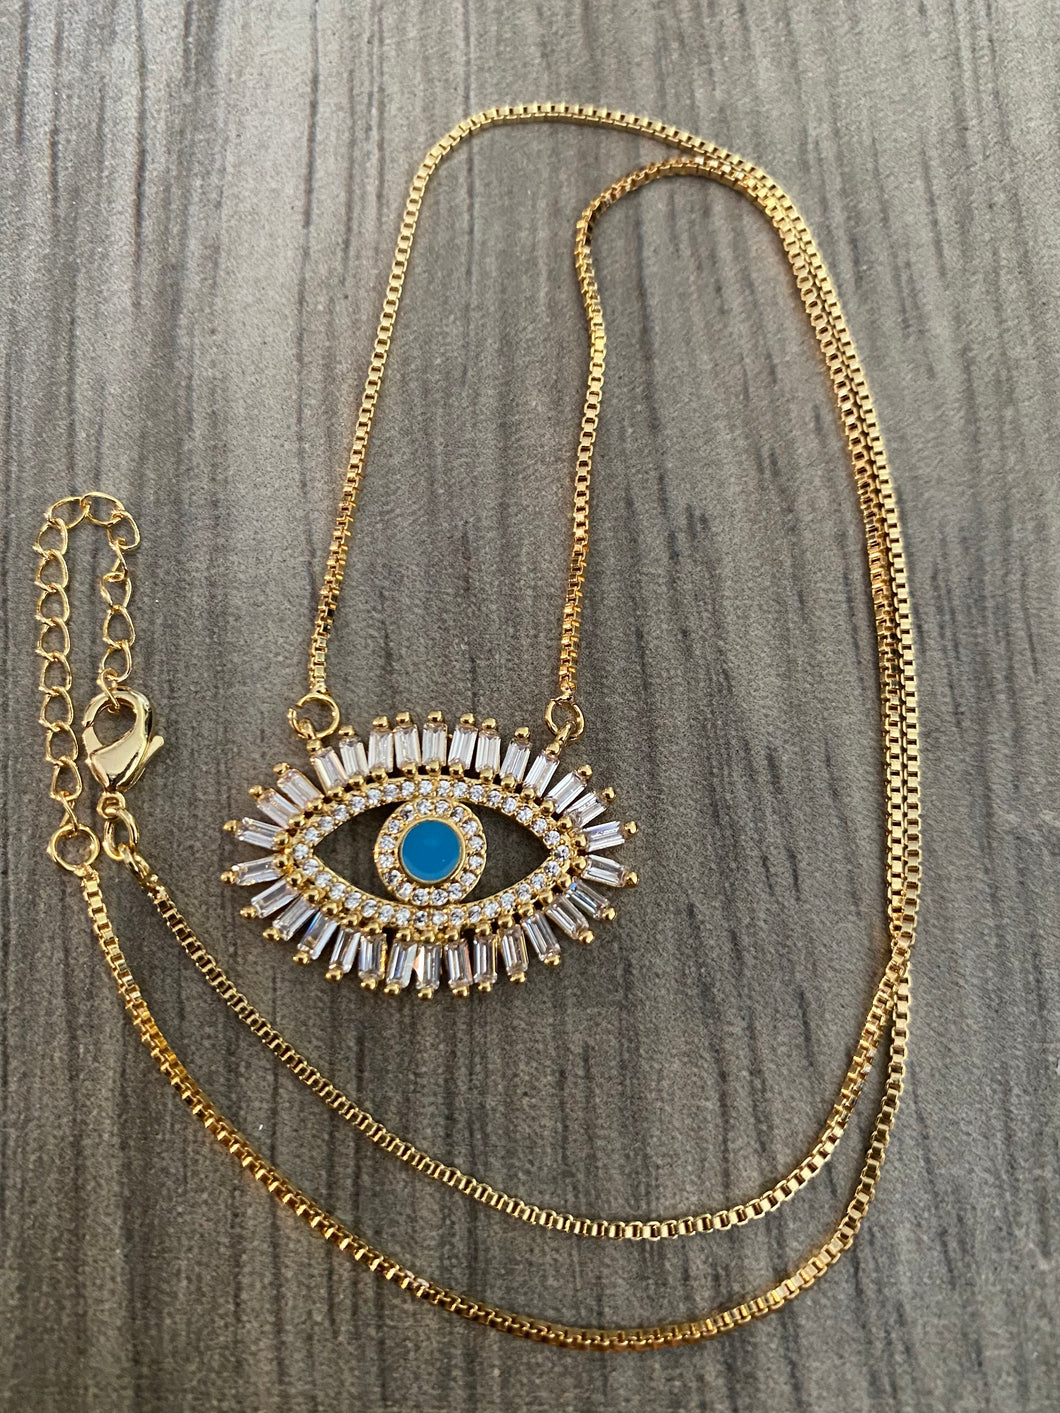 Crystal Evil Eye Necklace